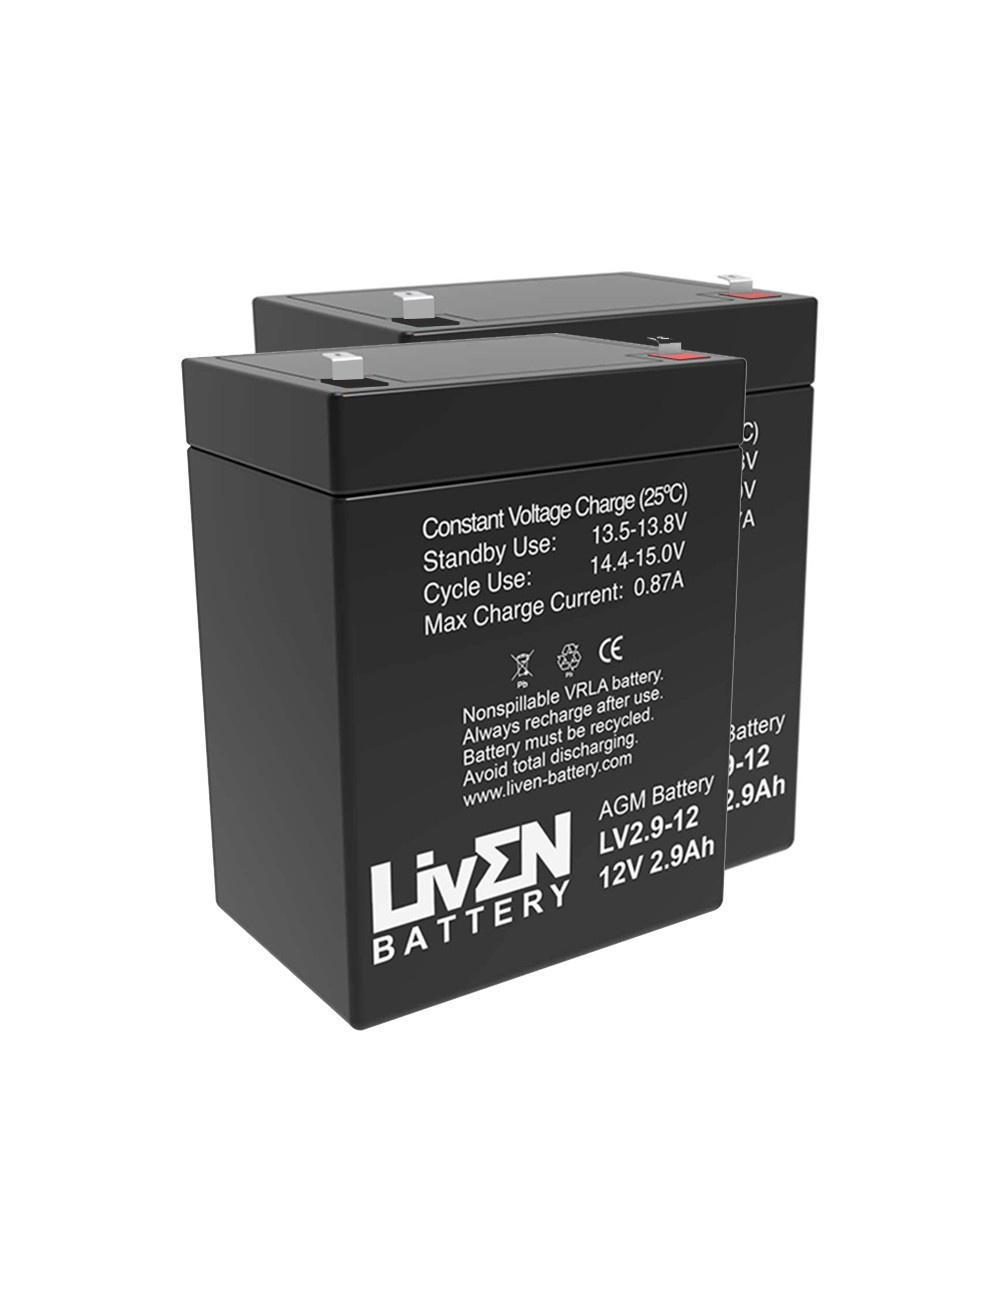 Pack 2 baterías (24V) para grúa Winncare WINN MOTION 175 de 12V 2,9Ah Liven LV2.9-12 - 2xLV2.9-12 -  -  - 1